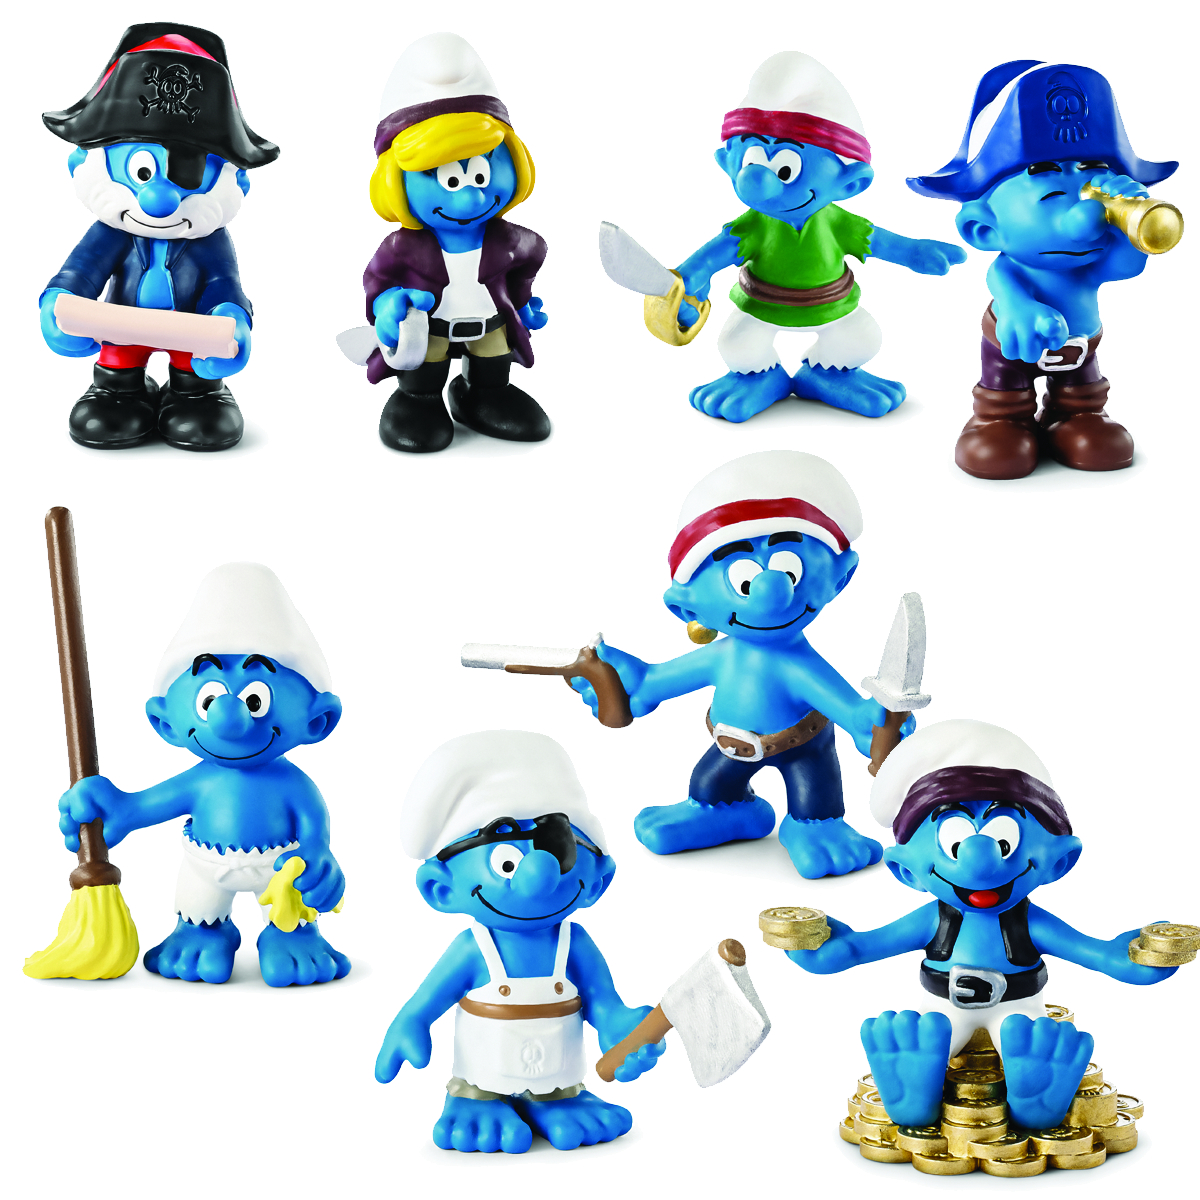 20760 Papa Smurf Pirate Captain Figurine from 2014 Pirate Set NEW Plastic Figure 